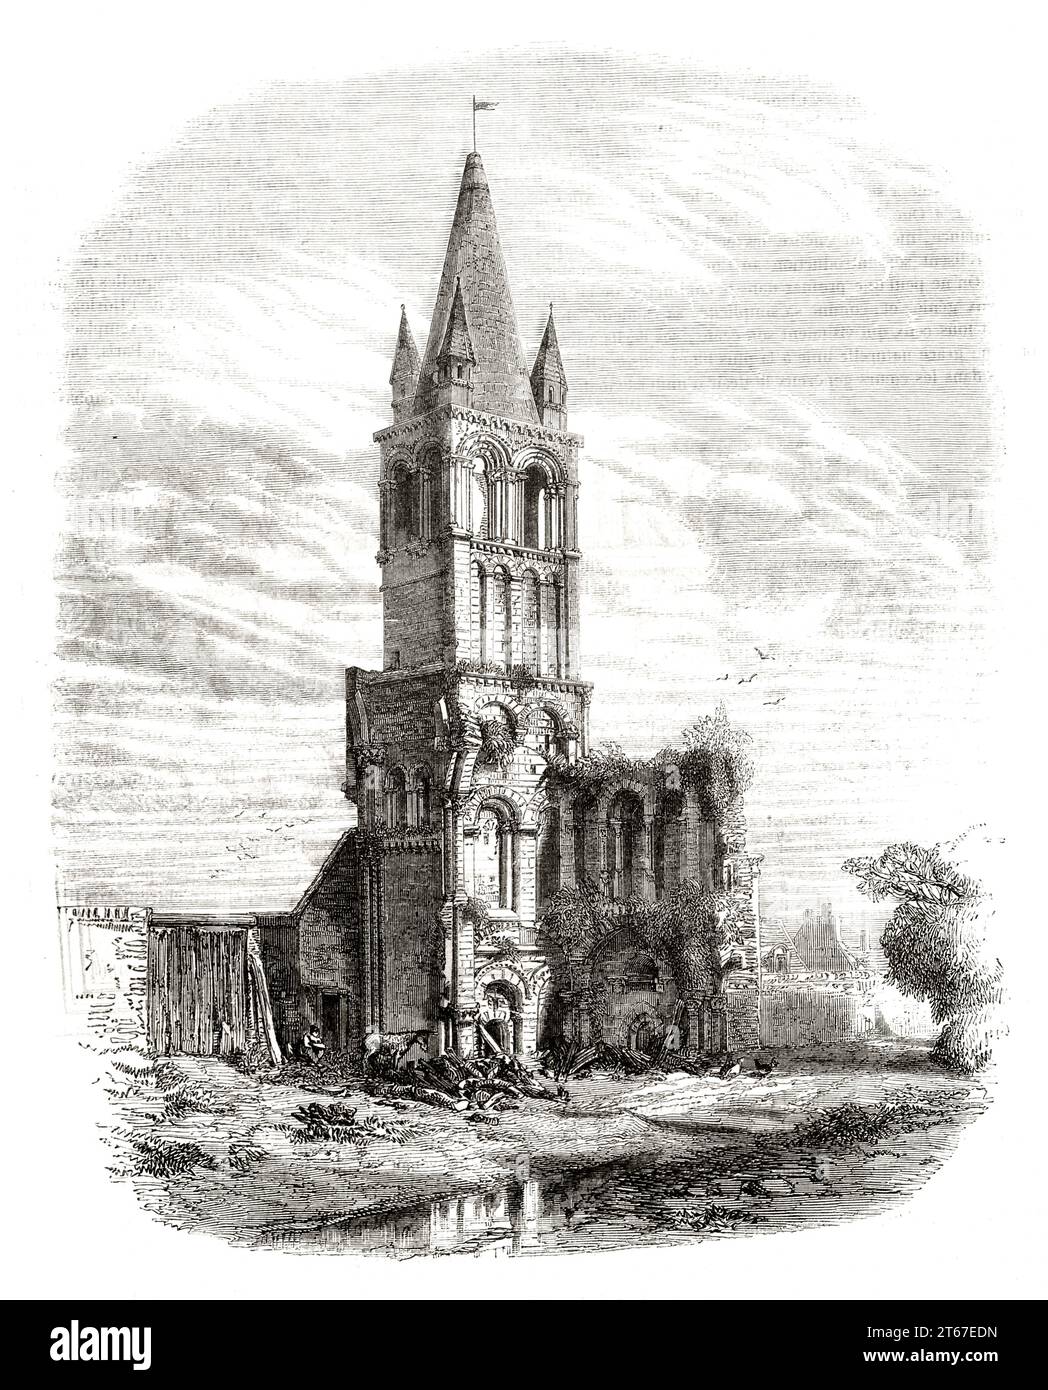 Old view of Notre-Dame de Deols abbey, France. By Villevielle, publ. on Magasin Pittoresque, Paris, 1851 Stock Photo